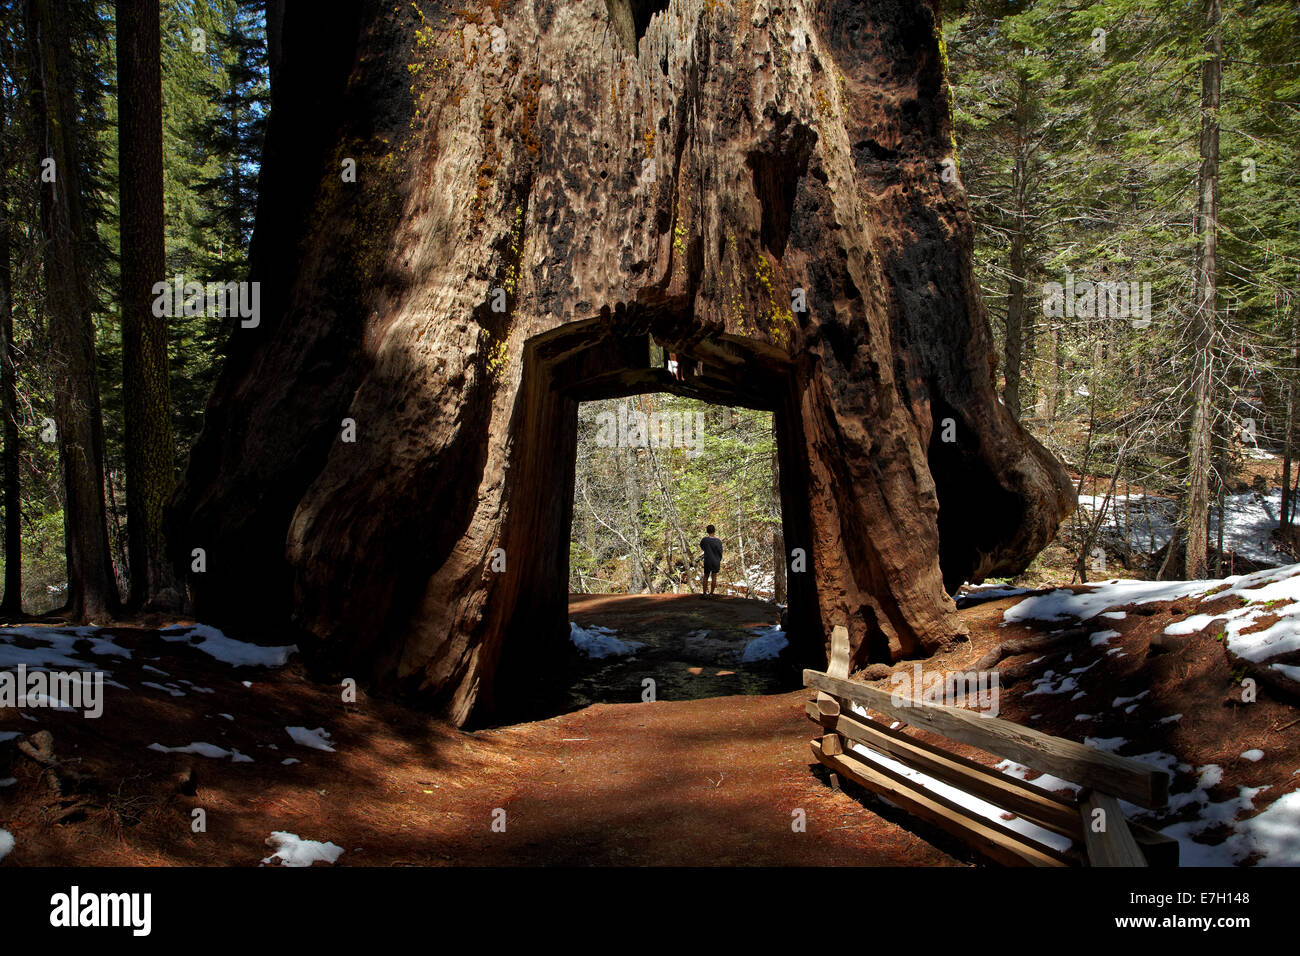 Tourist in Dead Giant Tunnel Tree, Tuolumne Grove, near Crane Flat, Yosemite National Park, California, USA Stock Photo